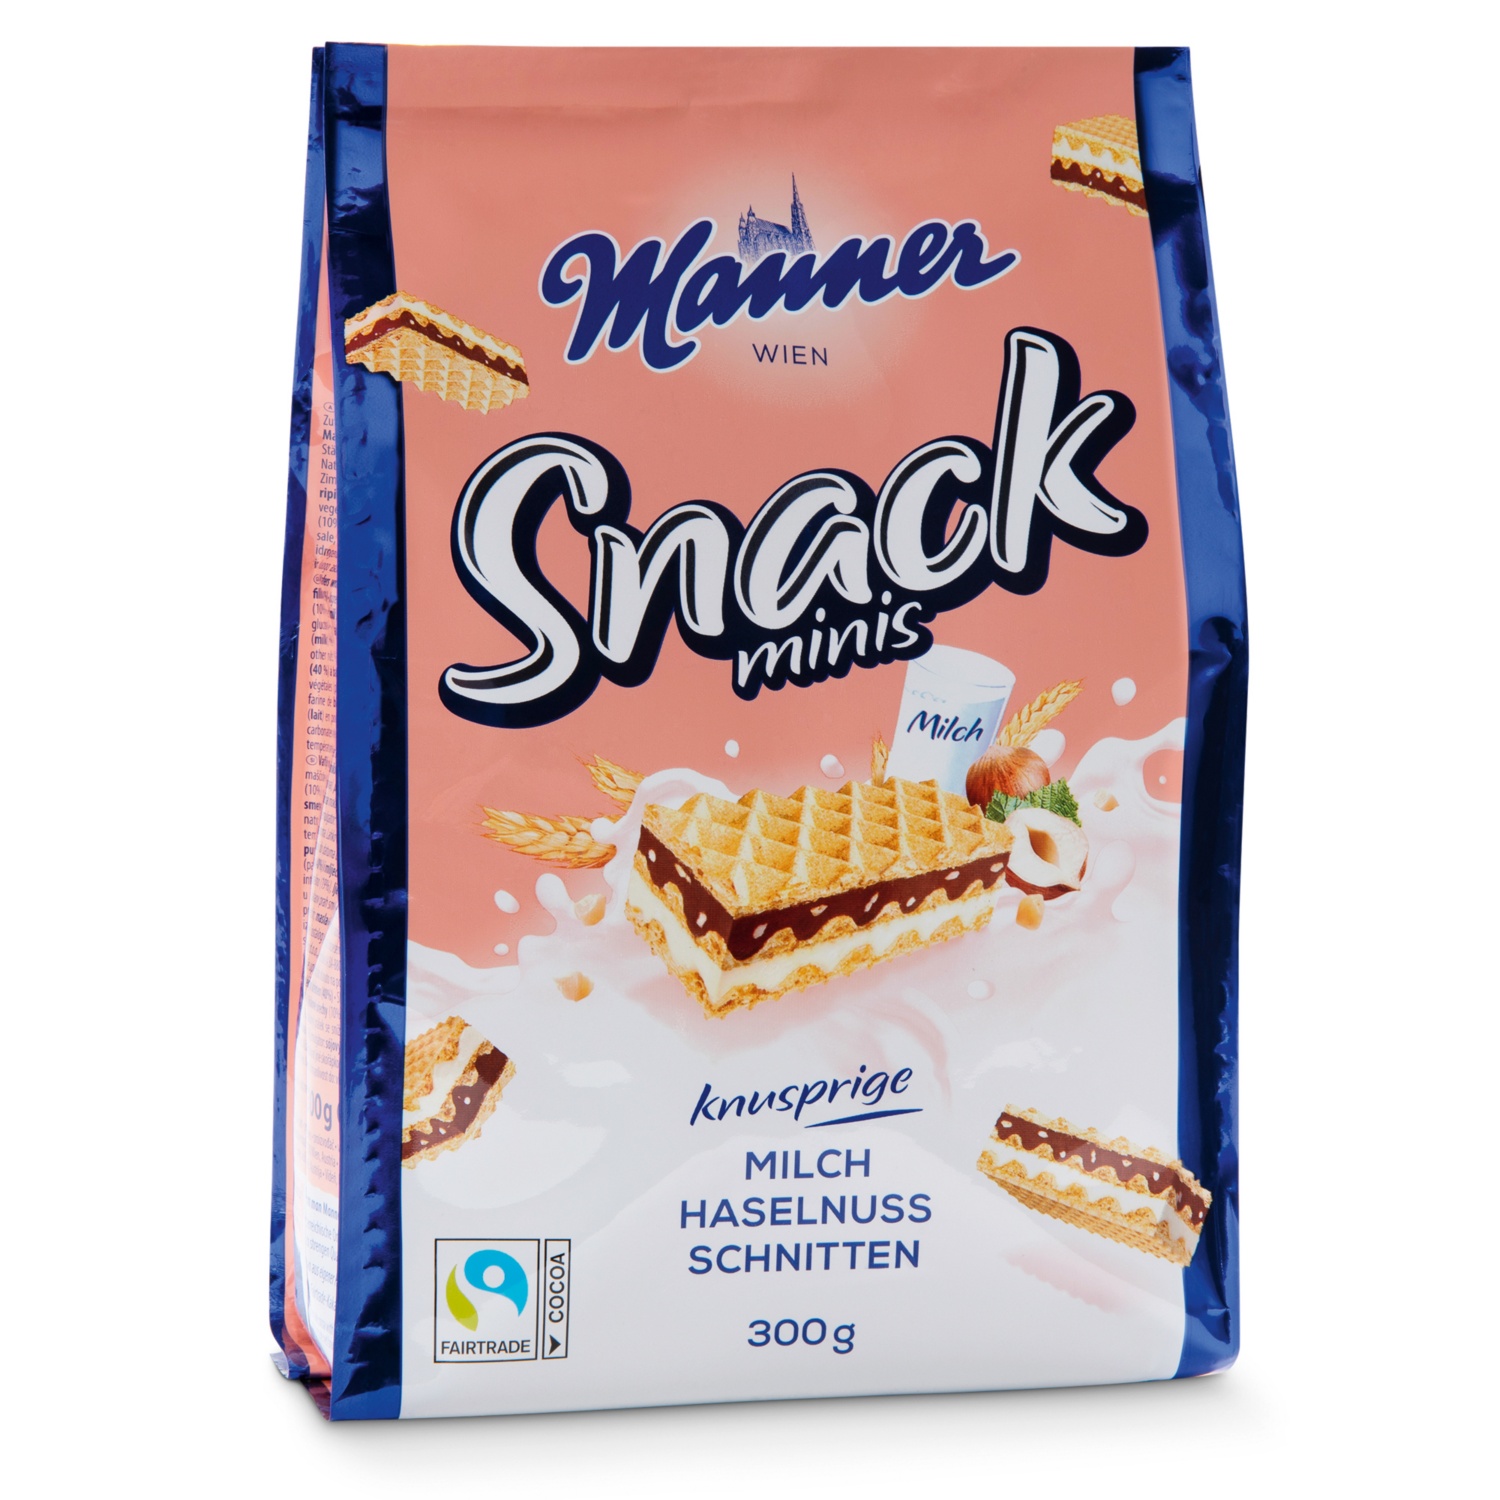 MANNER Snack Minis, Haselnuss